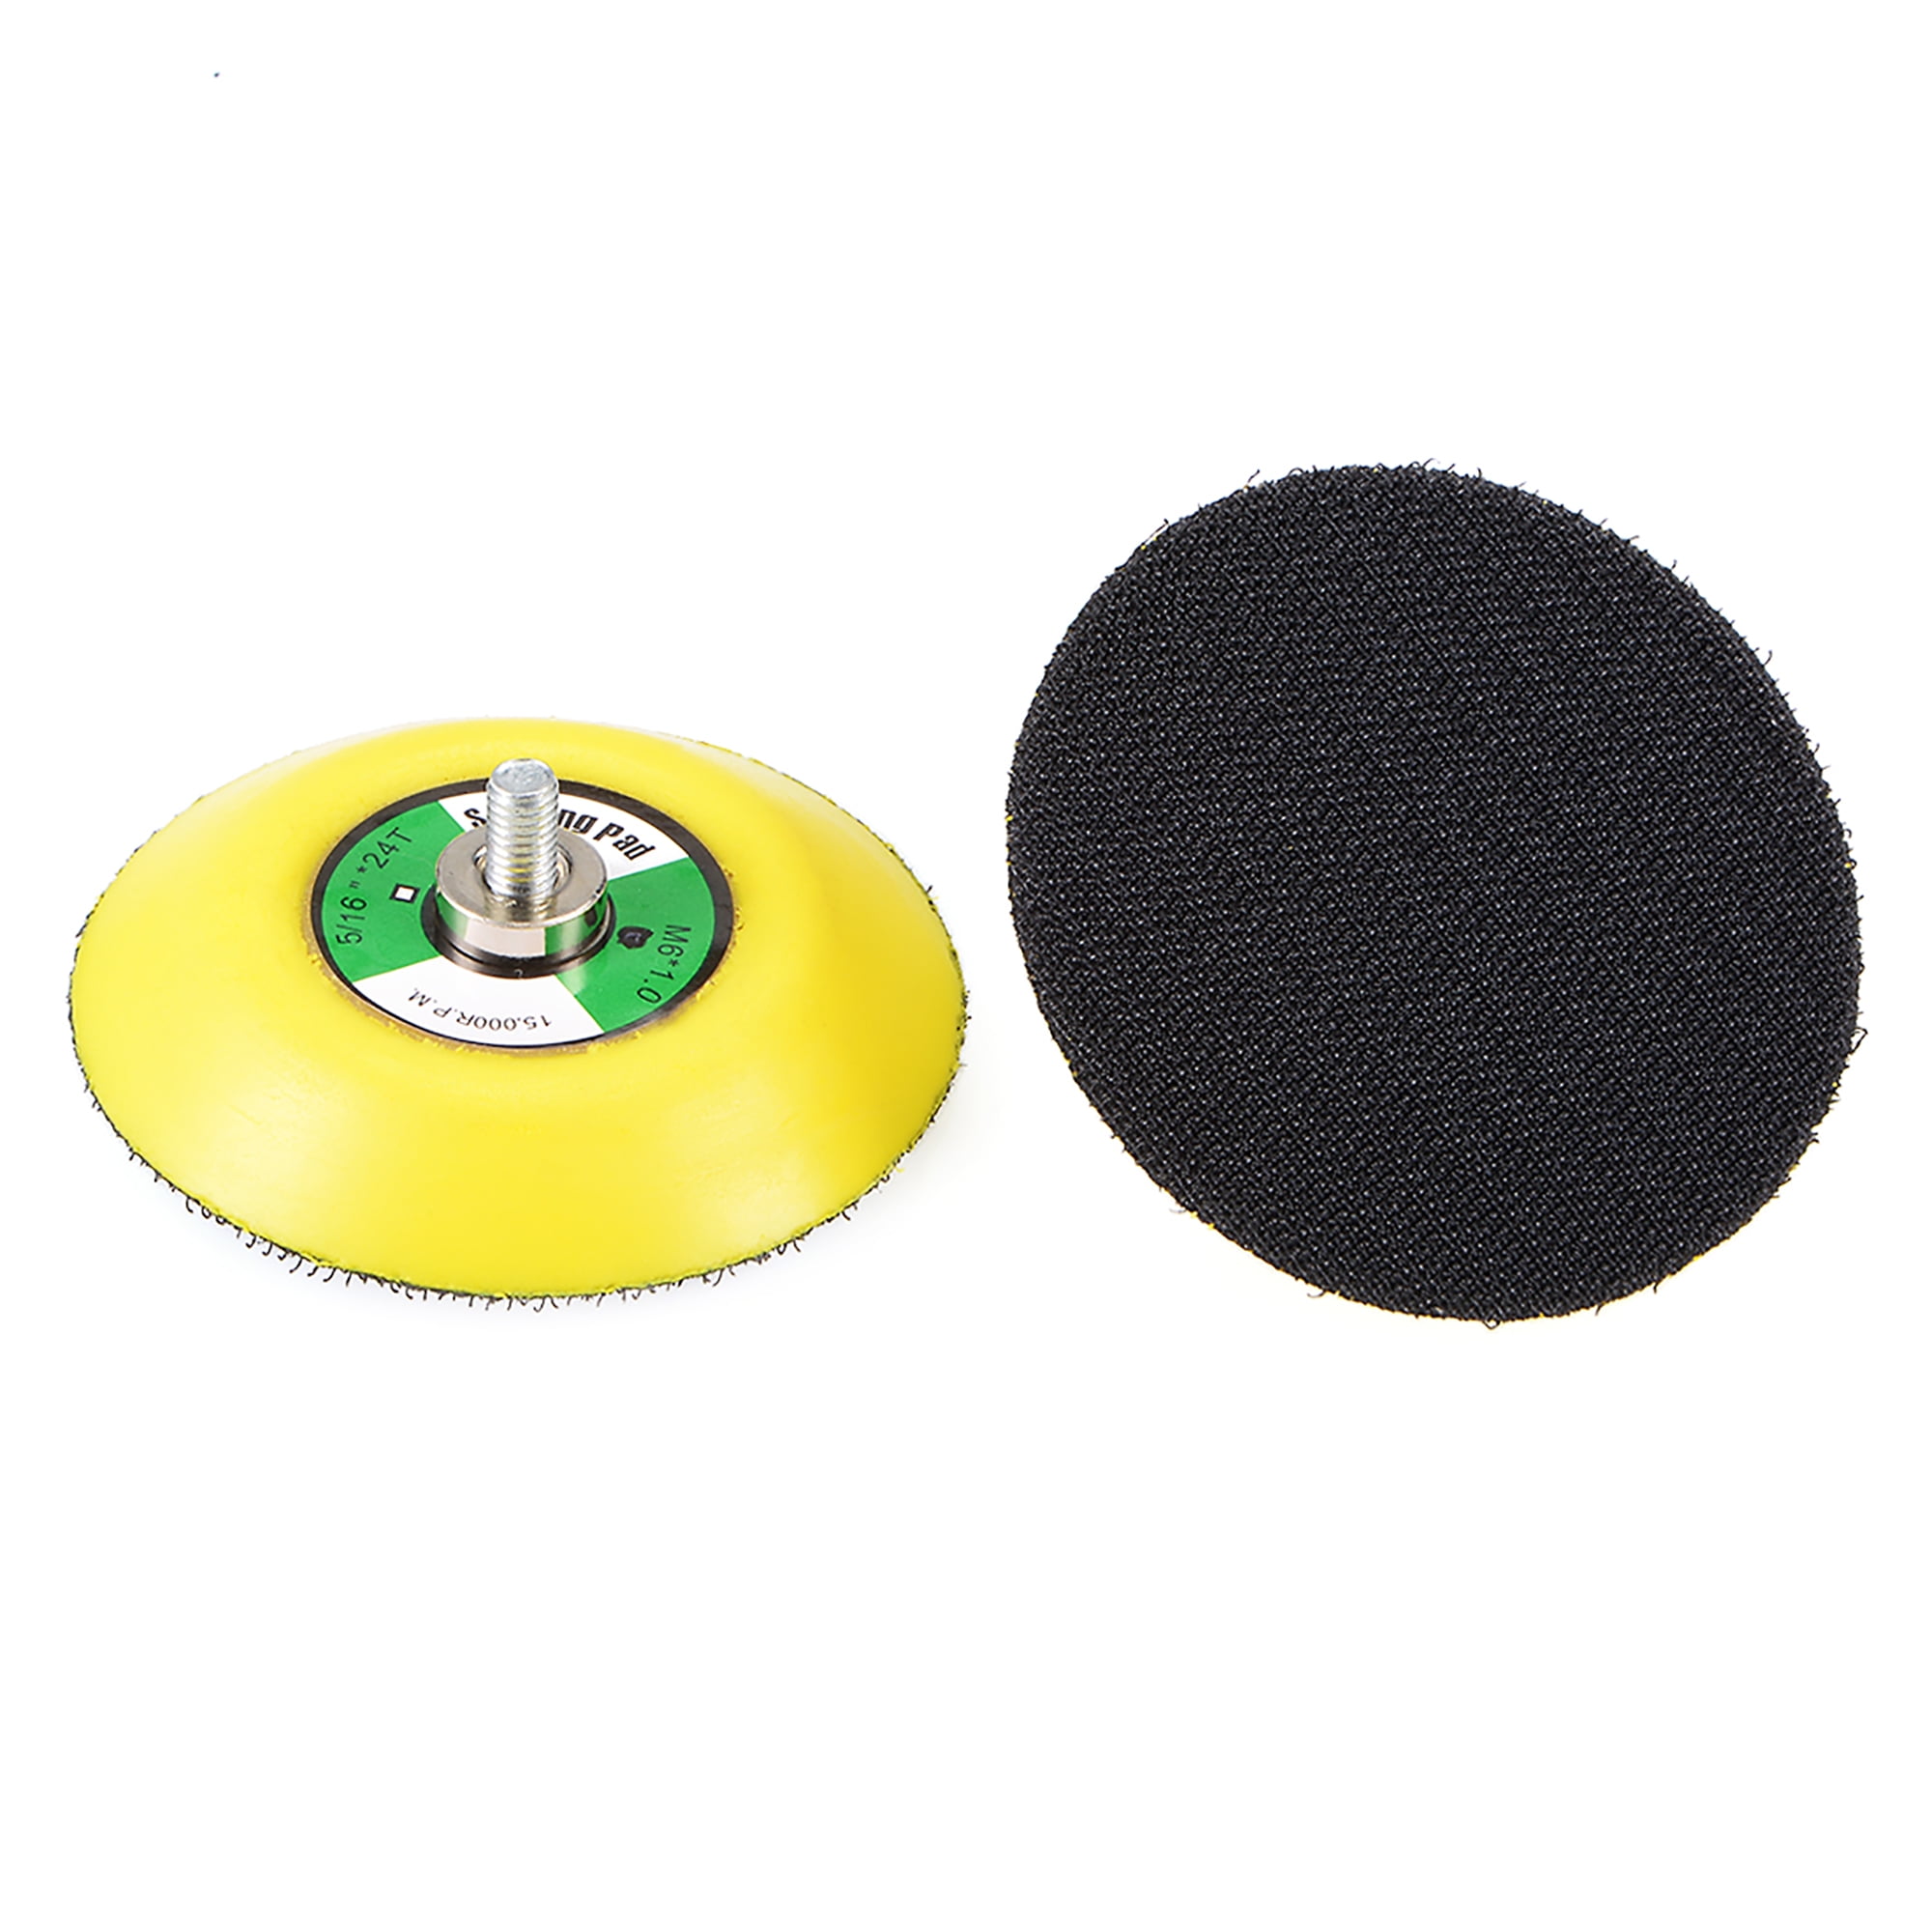 3-Inch Hook and Loop Sanding Pad Sandpaper Backing Plate for Sander 5 Pcs 